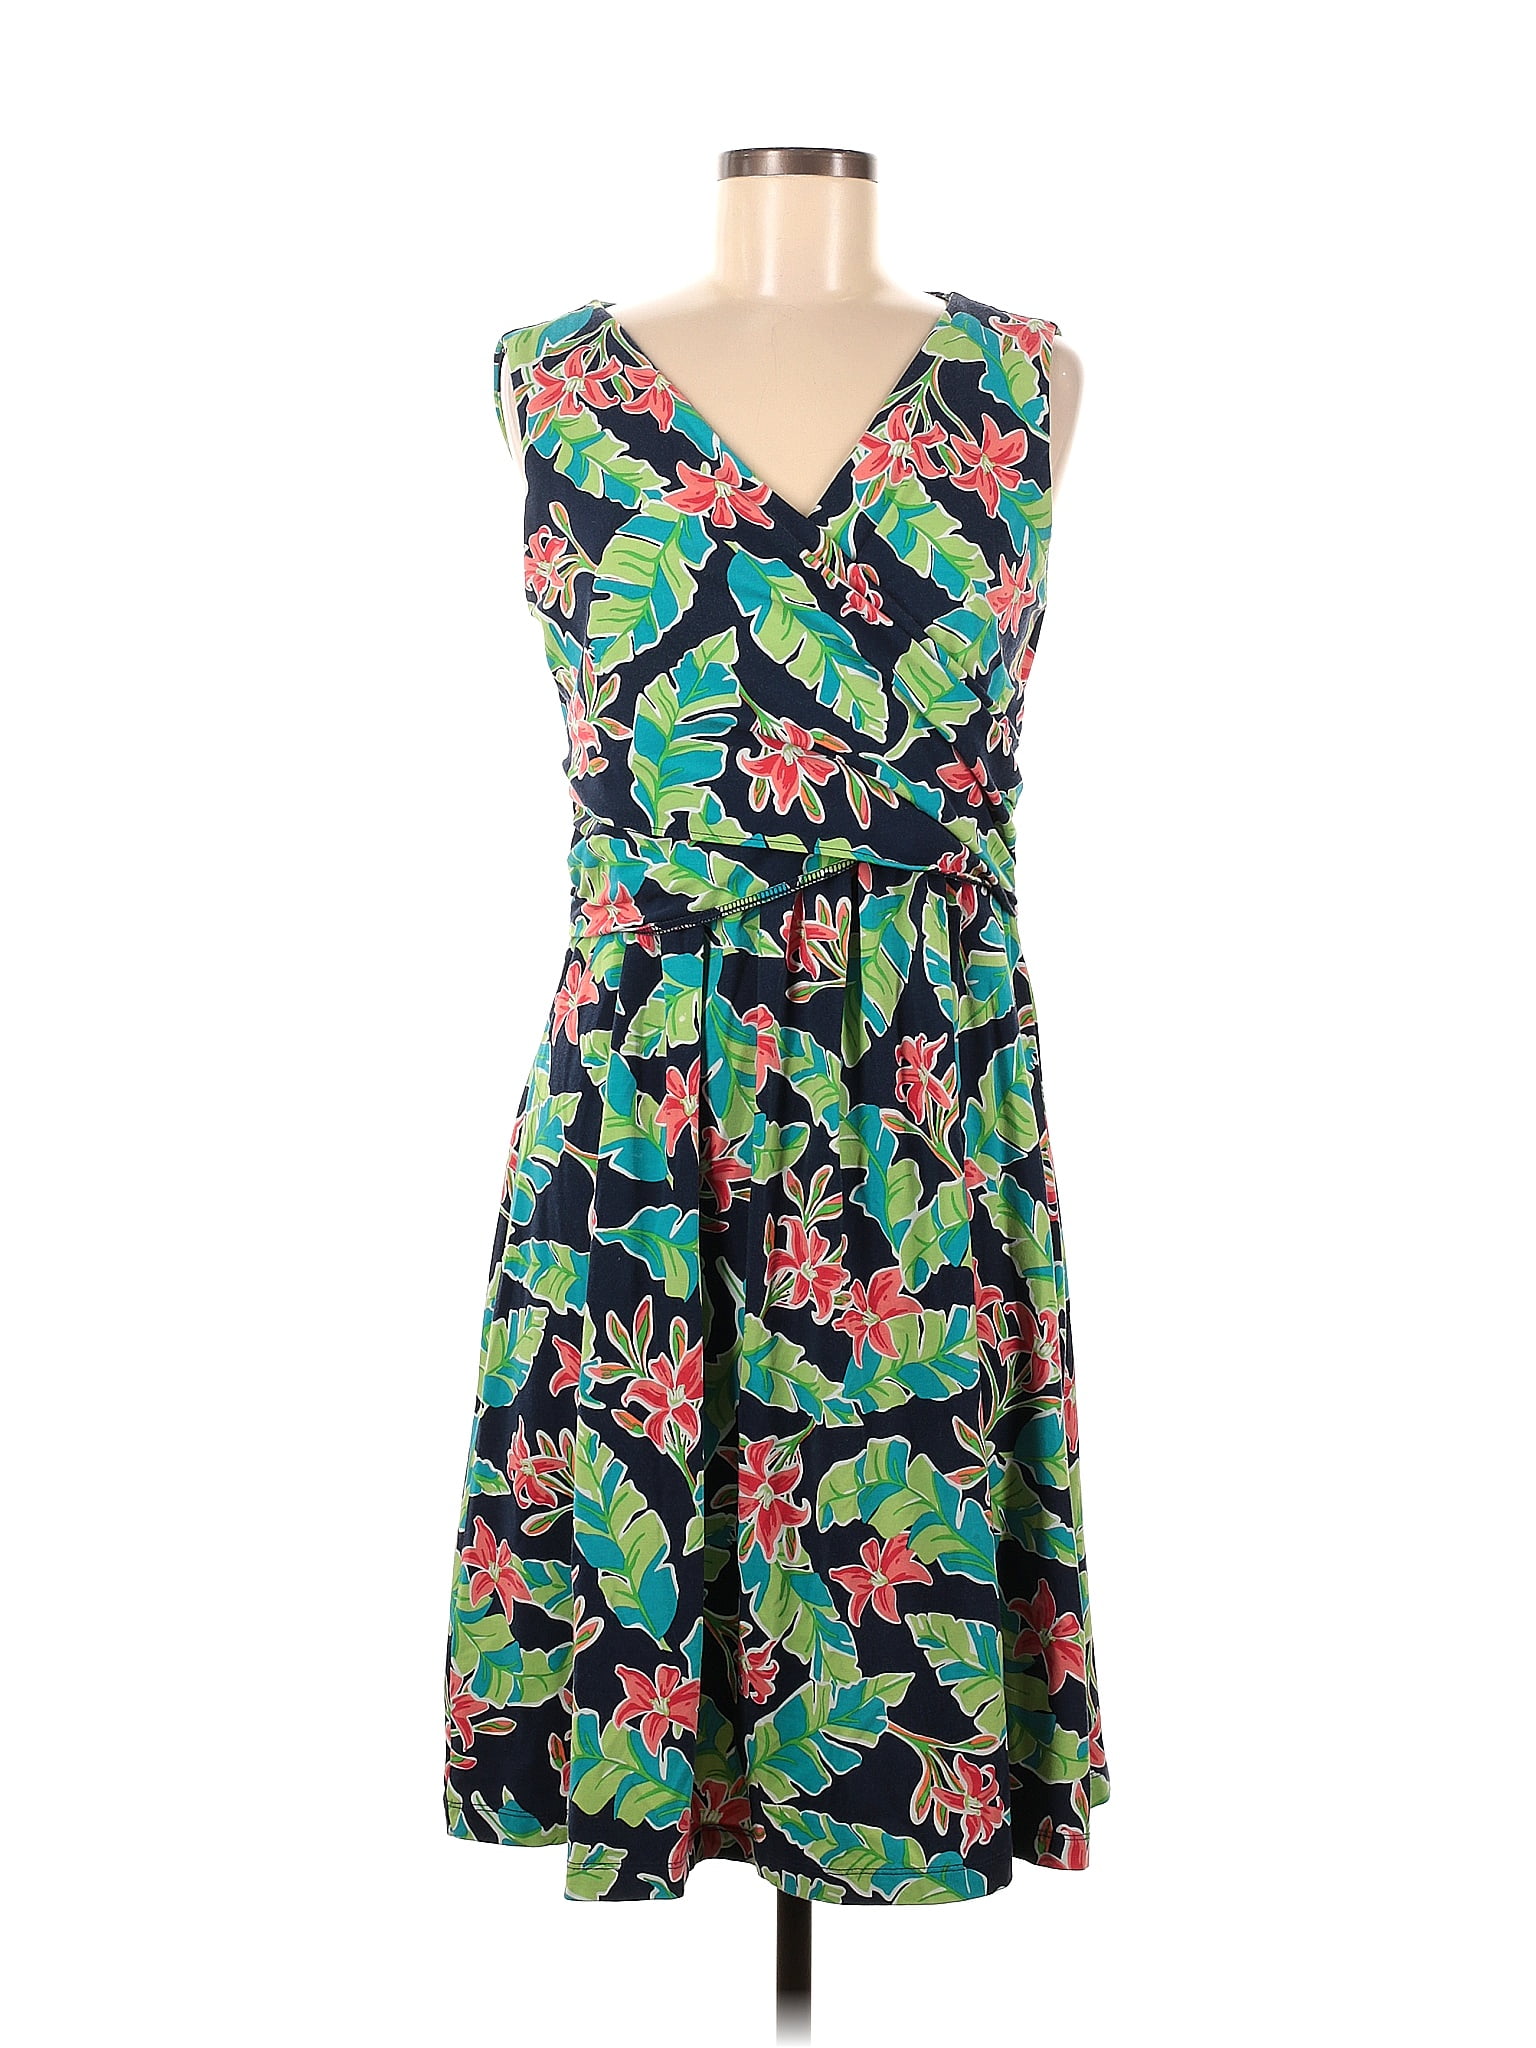 Lands' End Floral Multi Color Green Casual Dress Size M - 66% off | thredUP